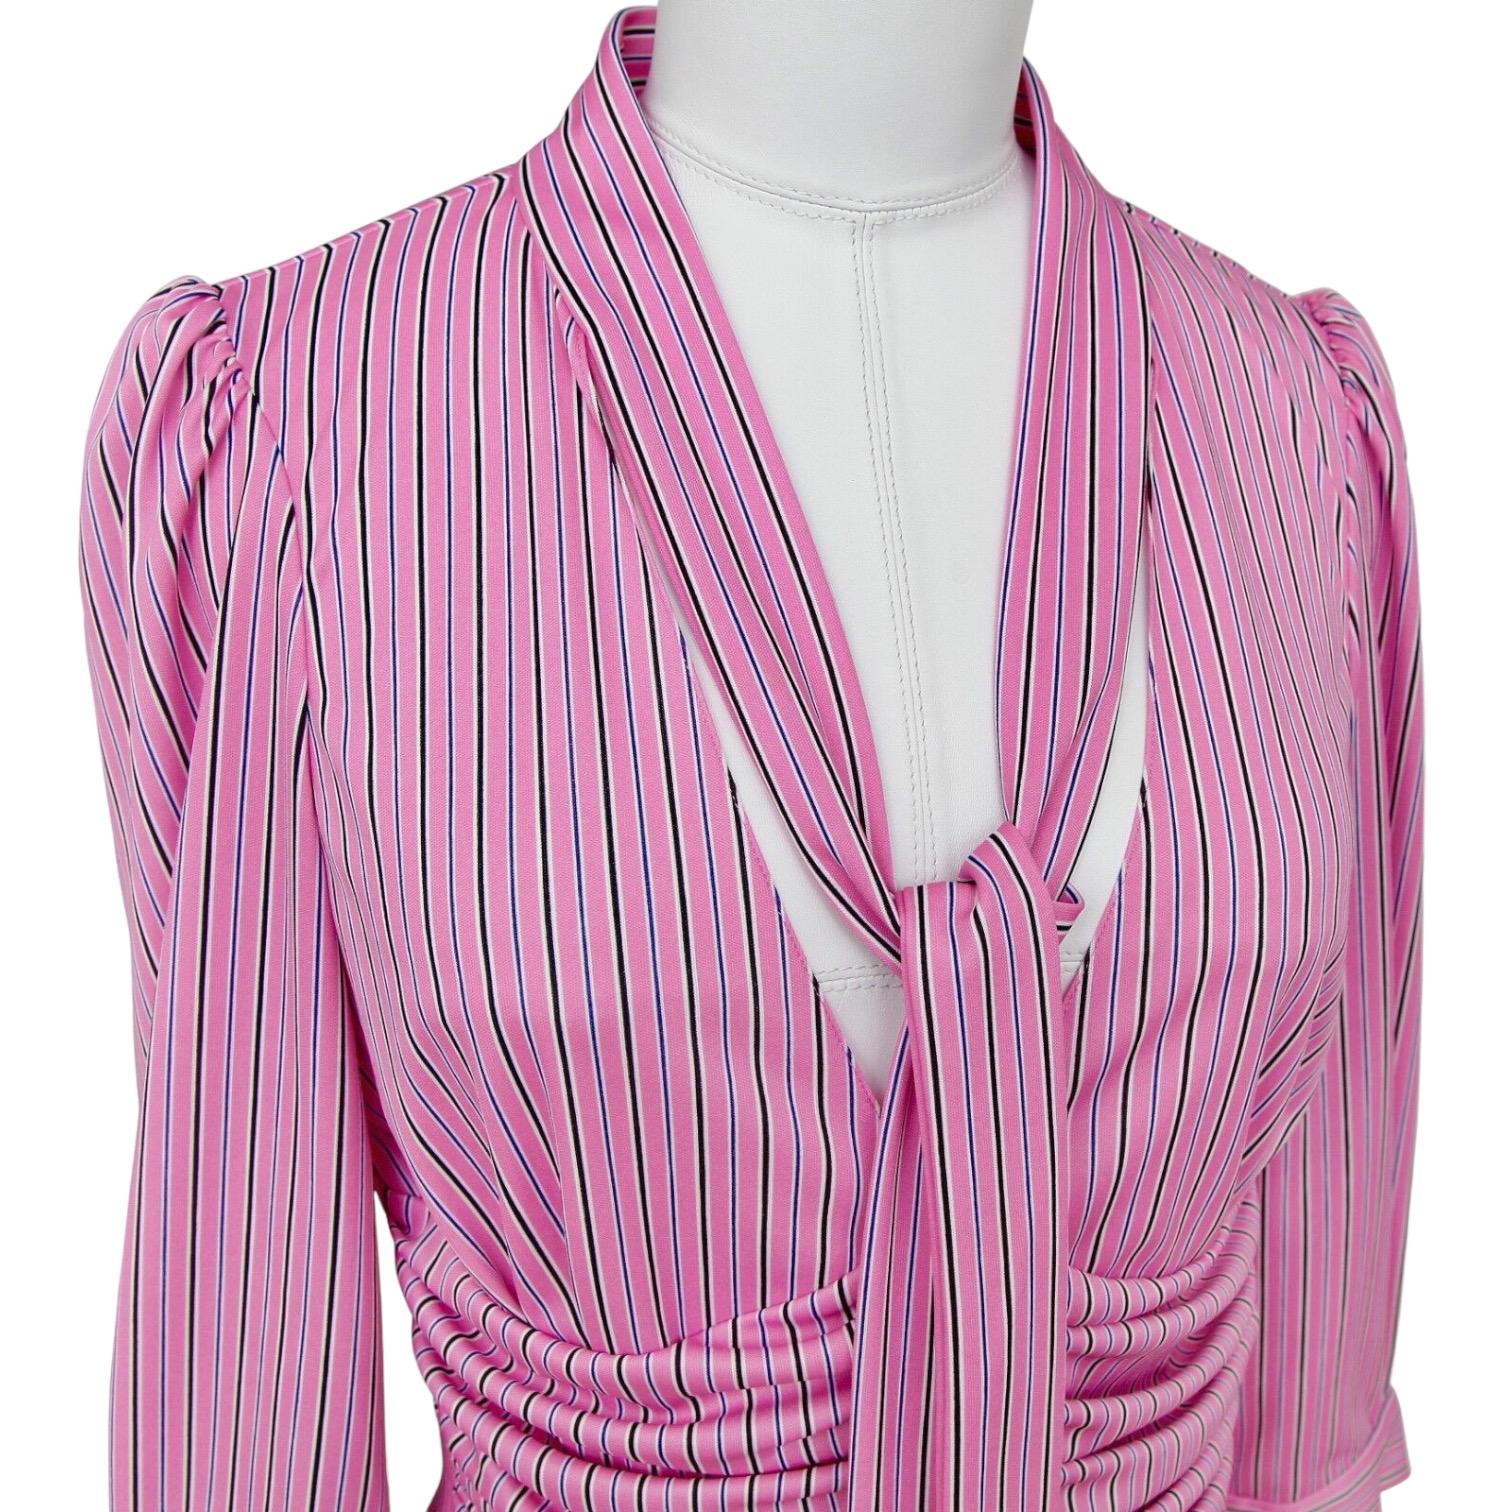 Women's BALENCIAGA Striped Top Shirt Blouse 3/4 Sleeve Neck Tie Rose White Black 38 NWT For Sale